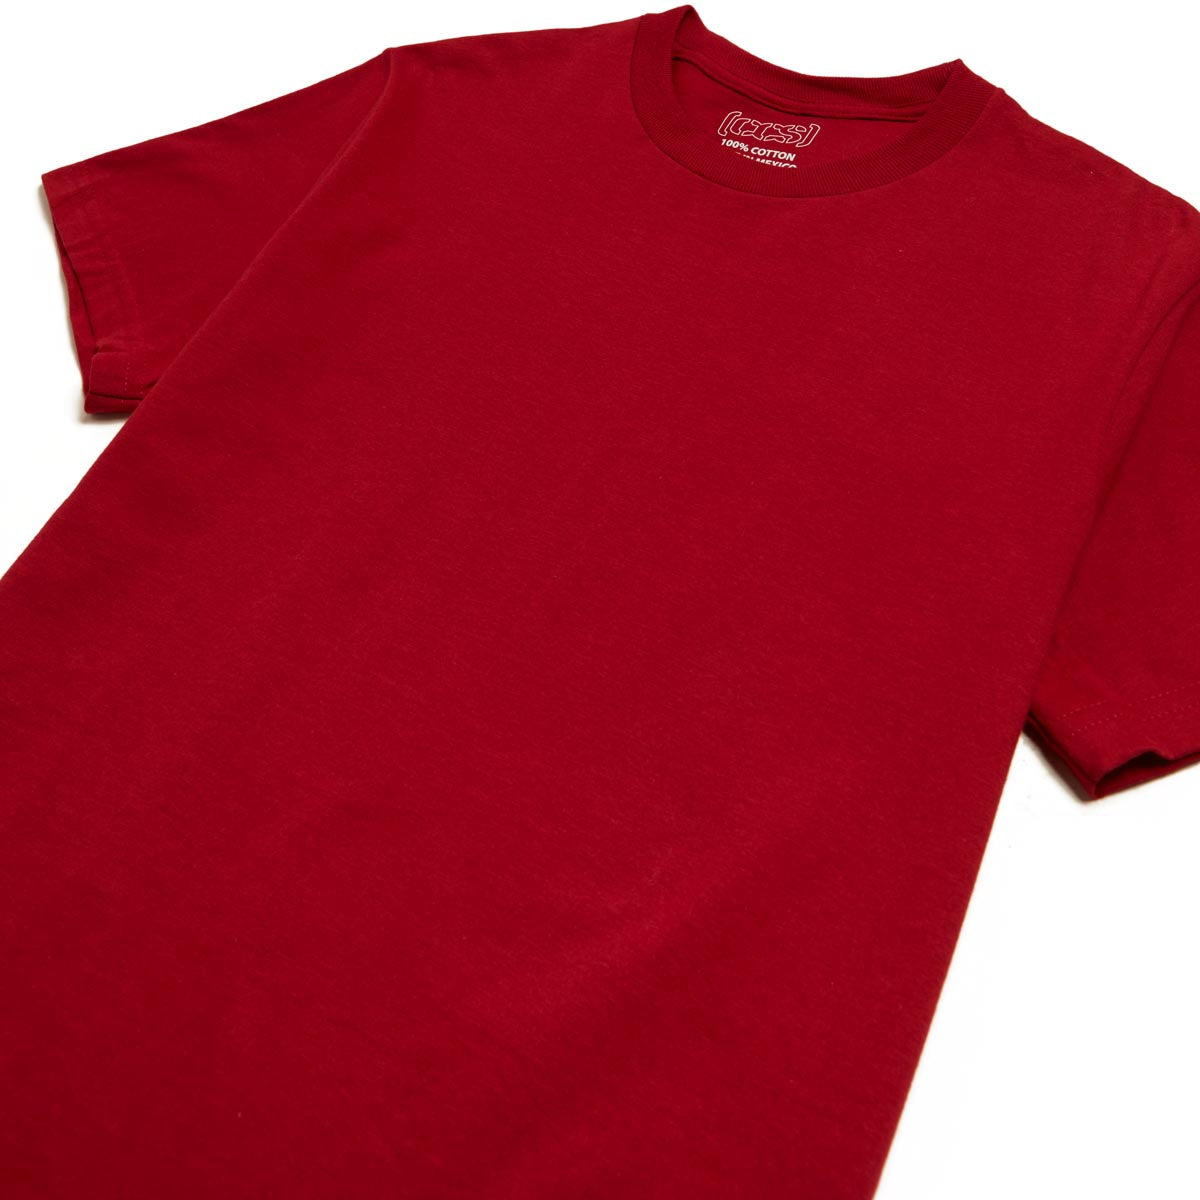 CCS Original Heavyweight T-Shirt - Red image 2